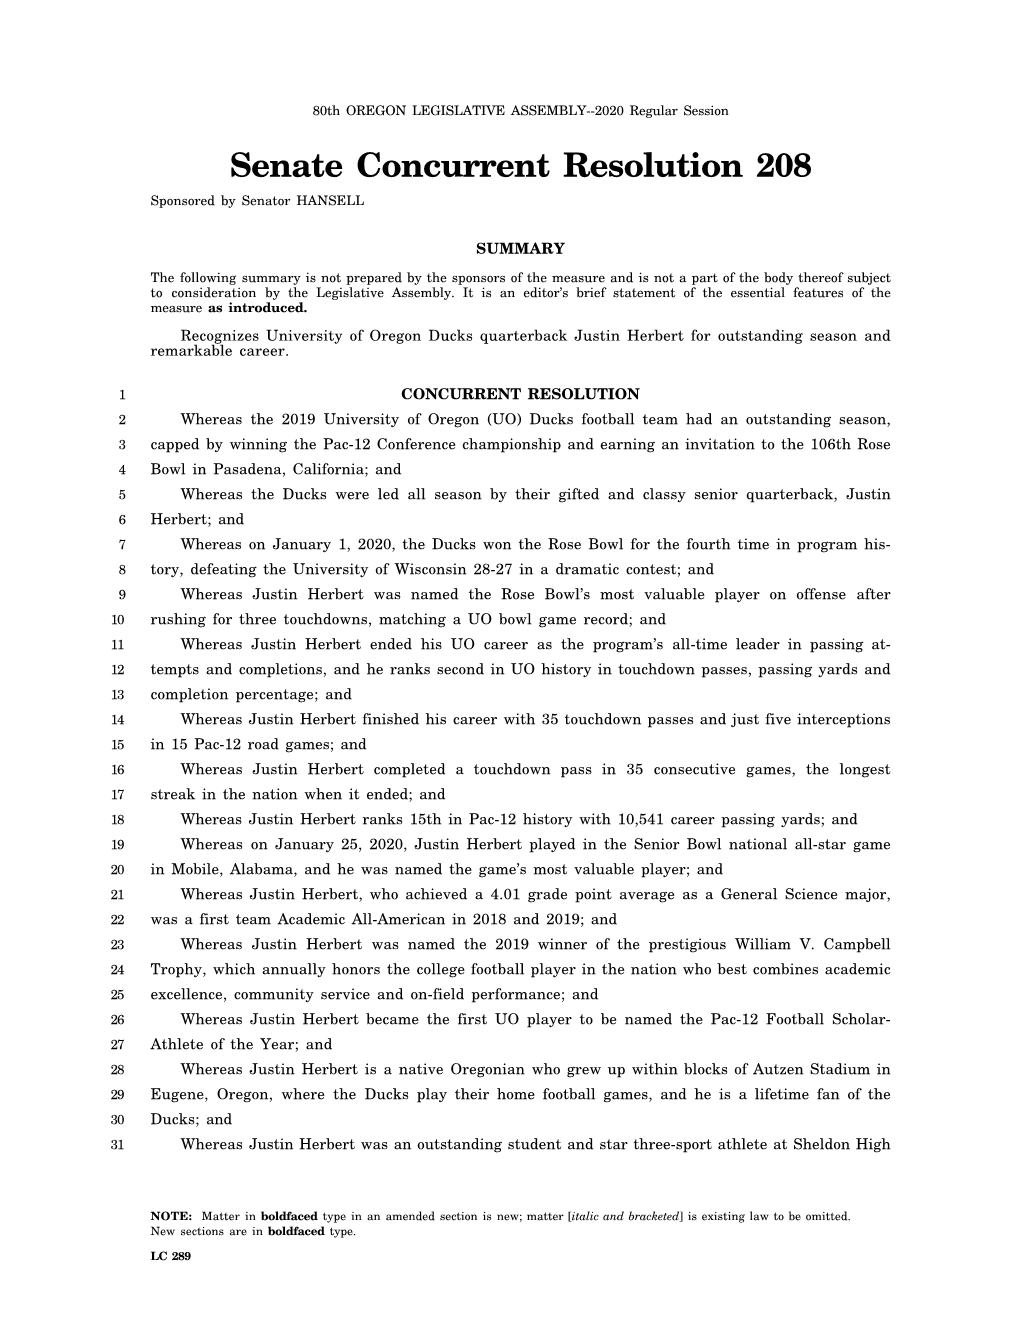 Senate Concurrent Resolution 208 Sponsored by Senator HANSELL